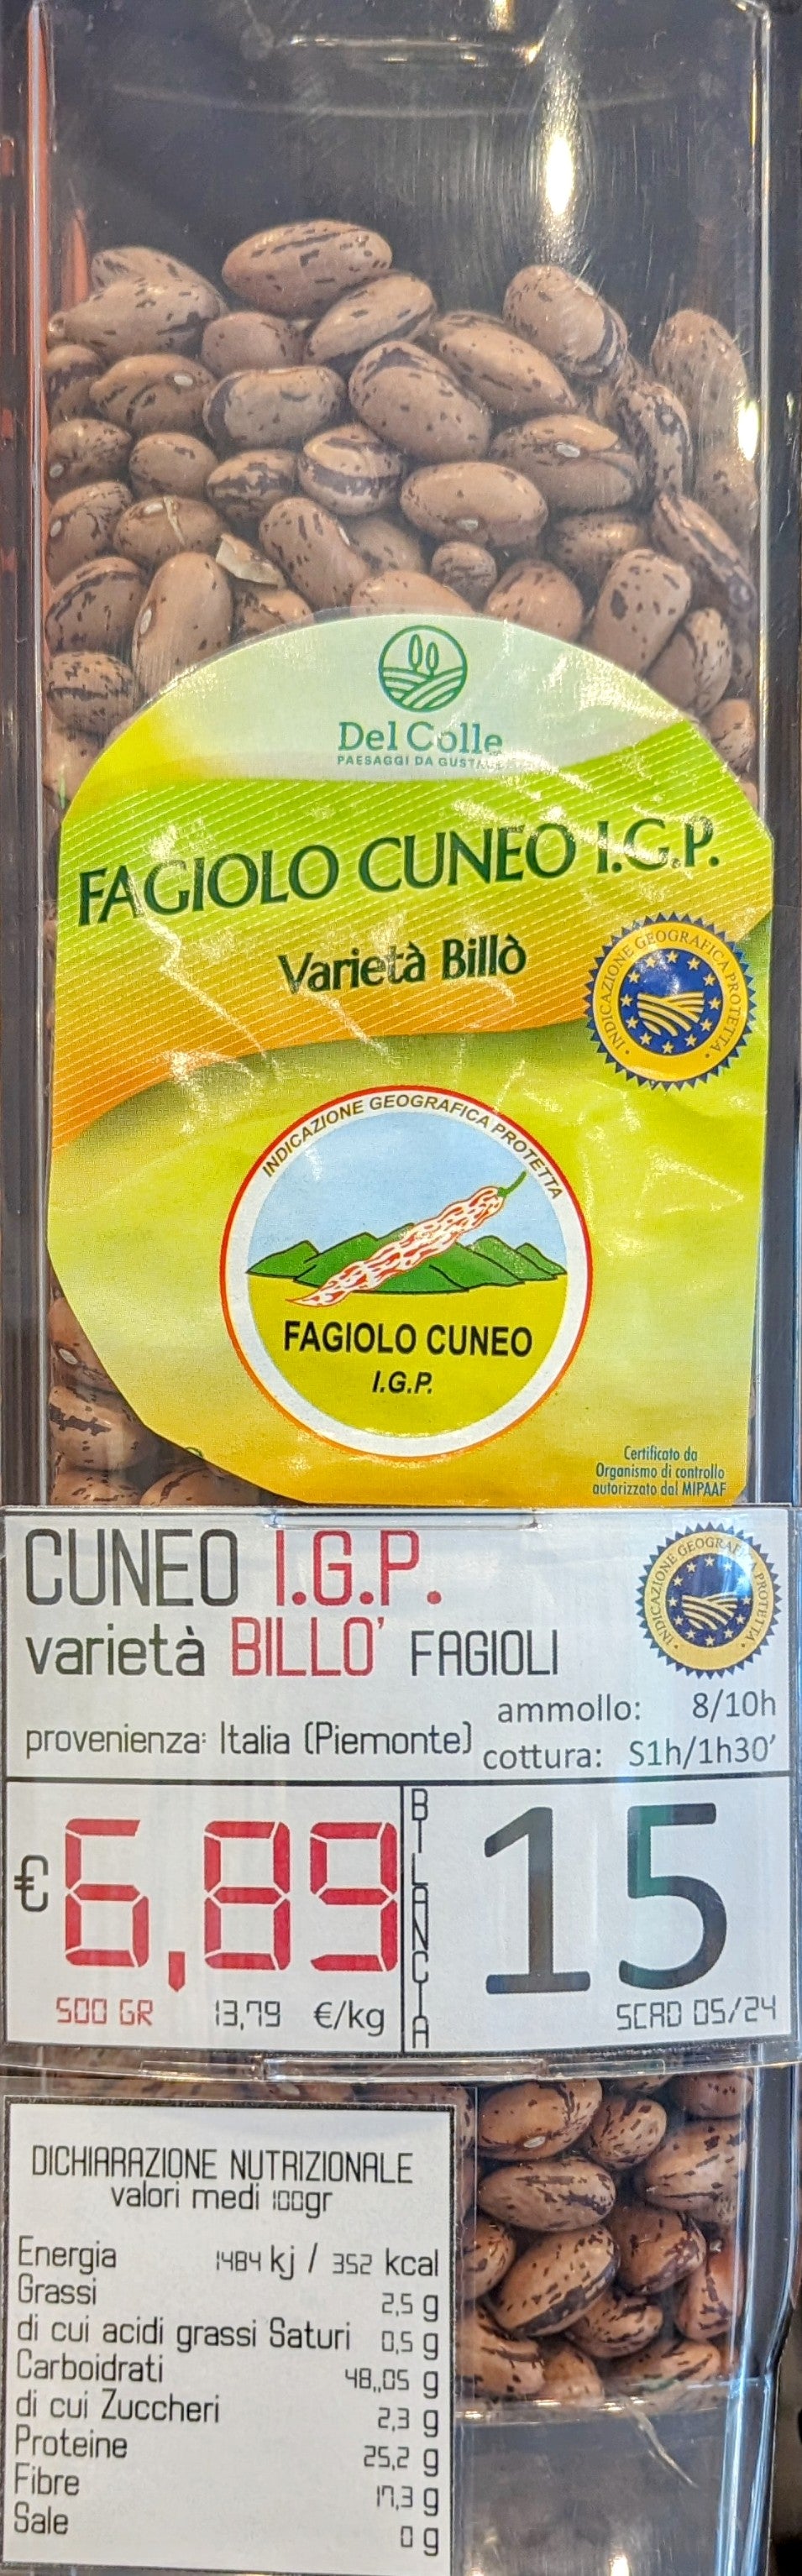 Cuneo varietà Billò I.G.P. fagioli